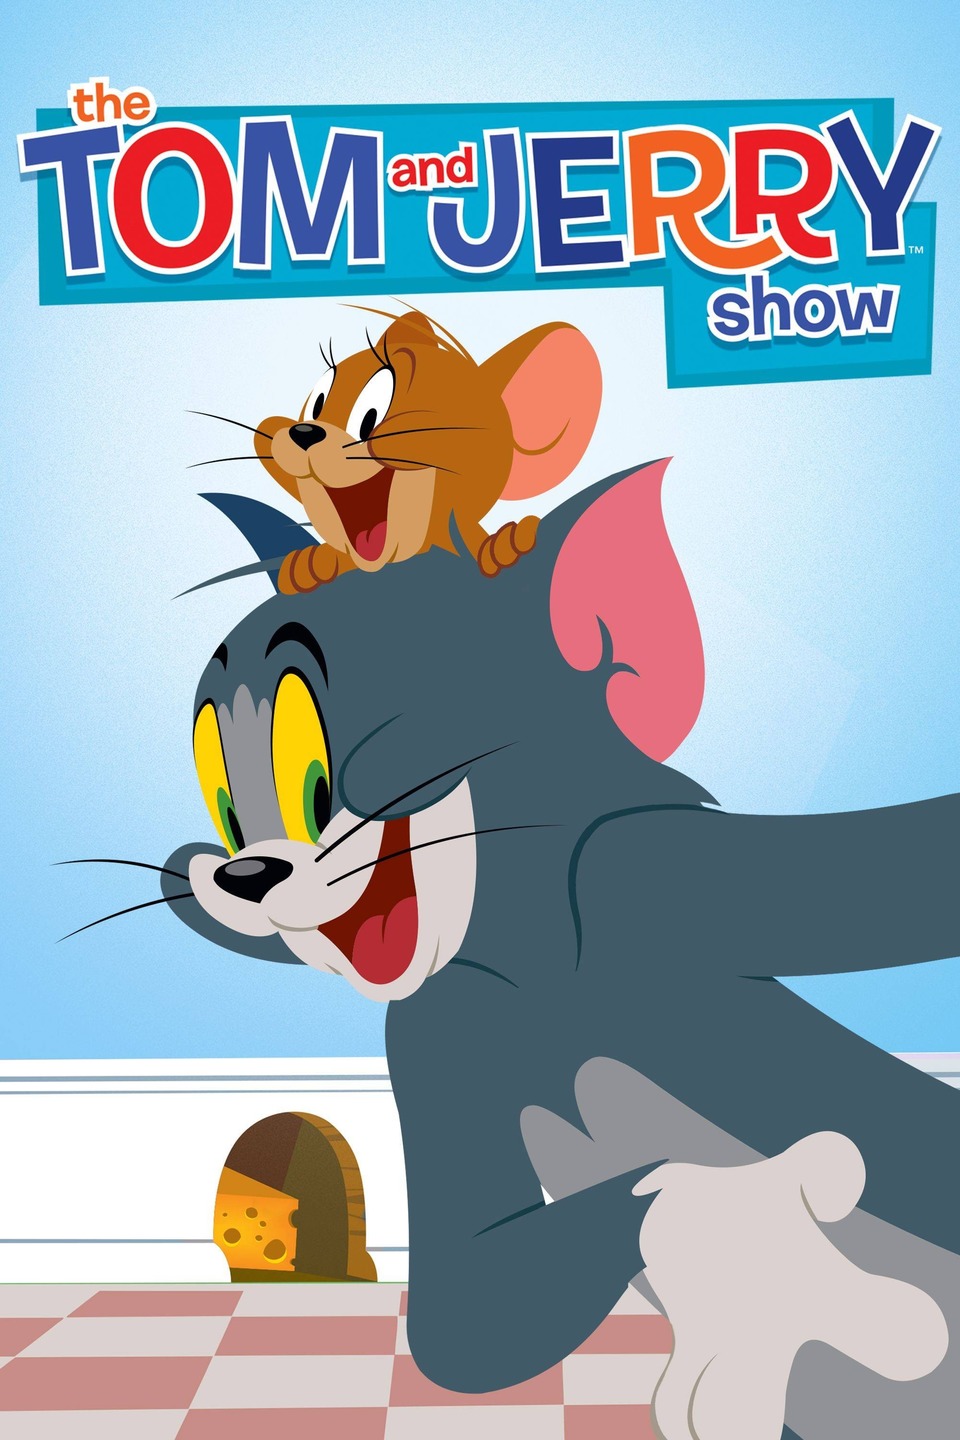 Show Toma a Jerryho